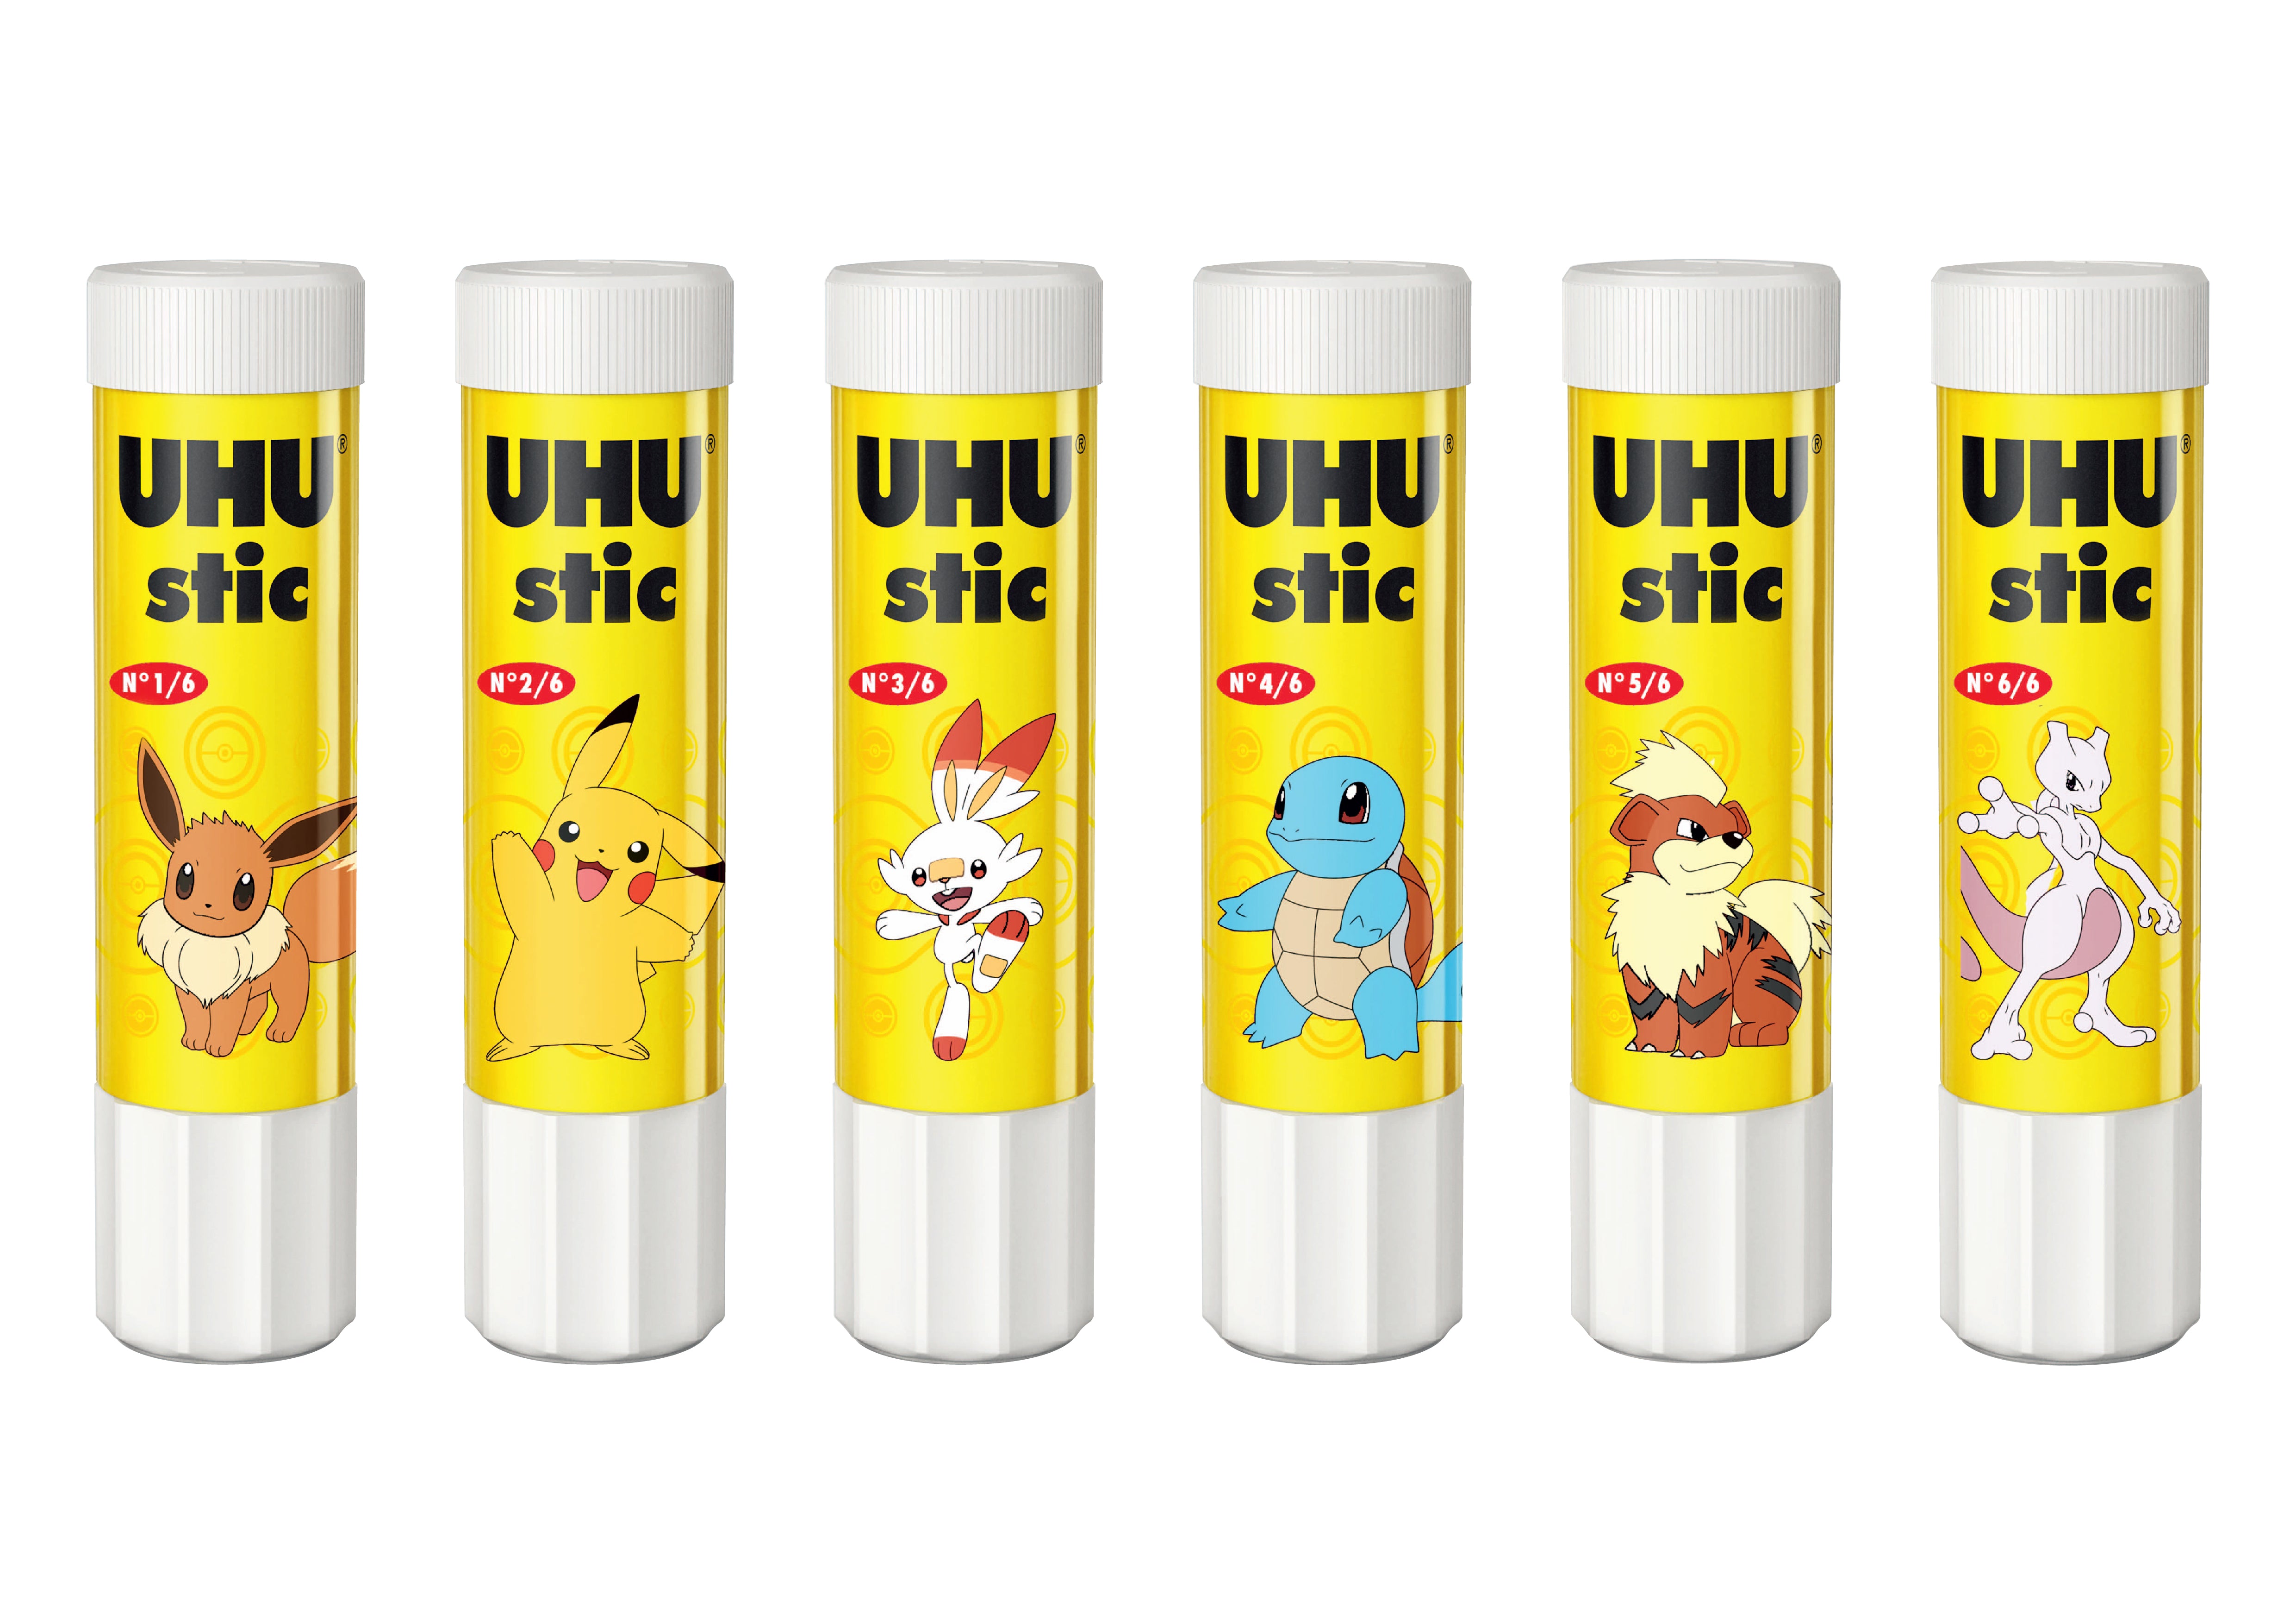 UHU Glue Stic 21g - _MS, ART & CRAFT, UHU